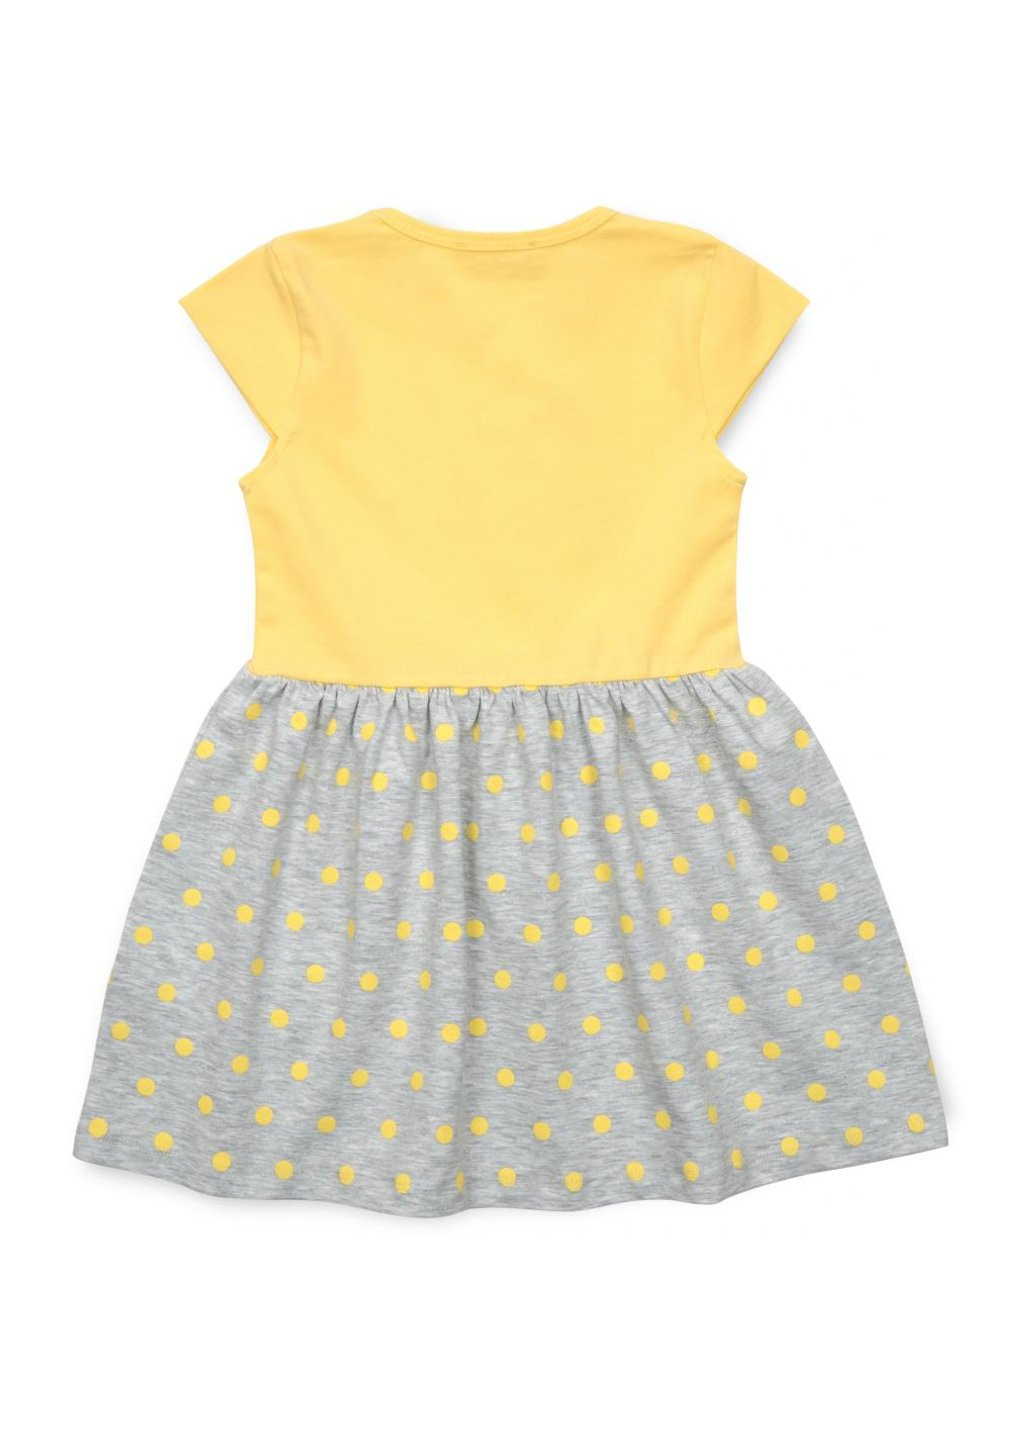 Жёлтое платье с единорогом (15133-104g-yellow) Breeze (257141140)